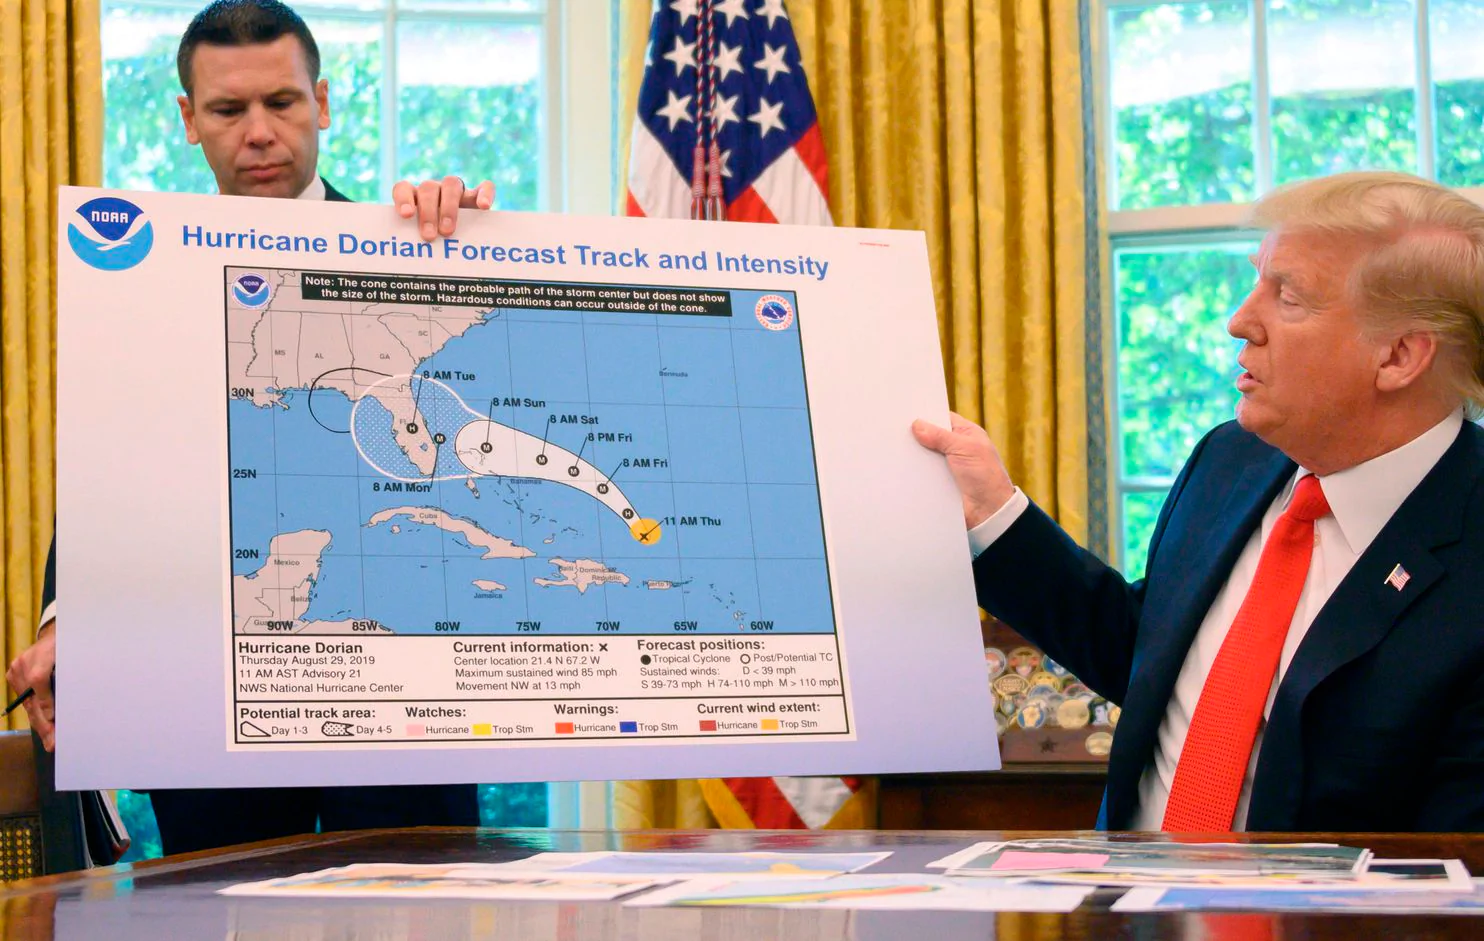 NOAA backs President Trump on Alabama Hurricane Dorian forecast over its own meteorologists